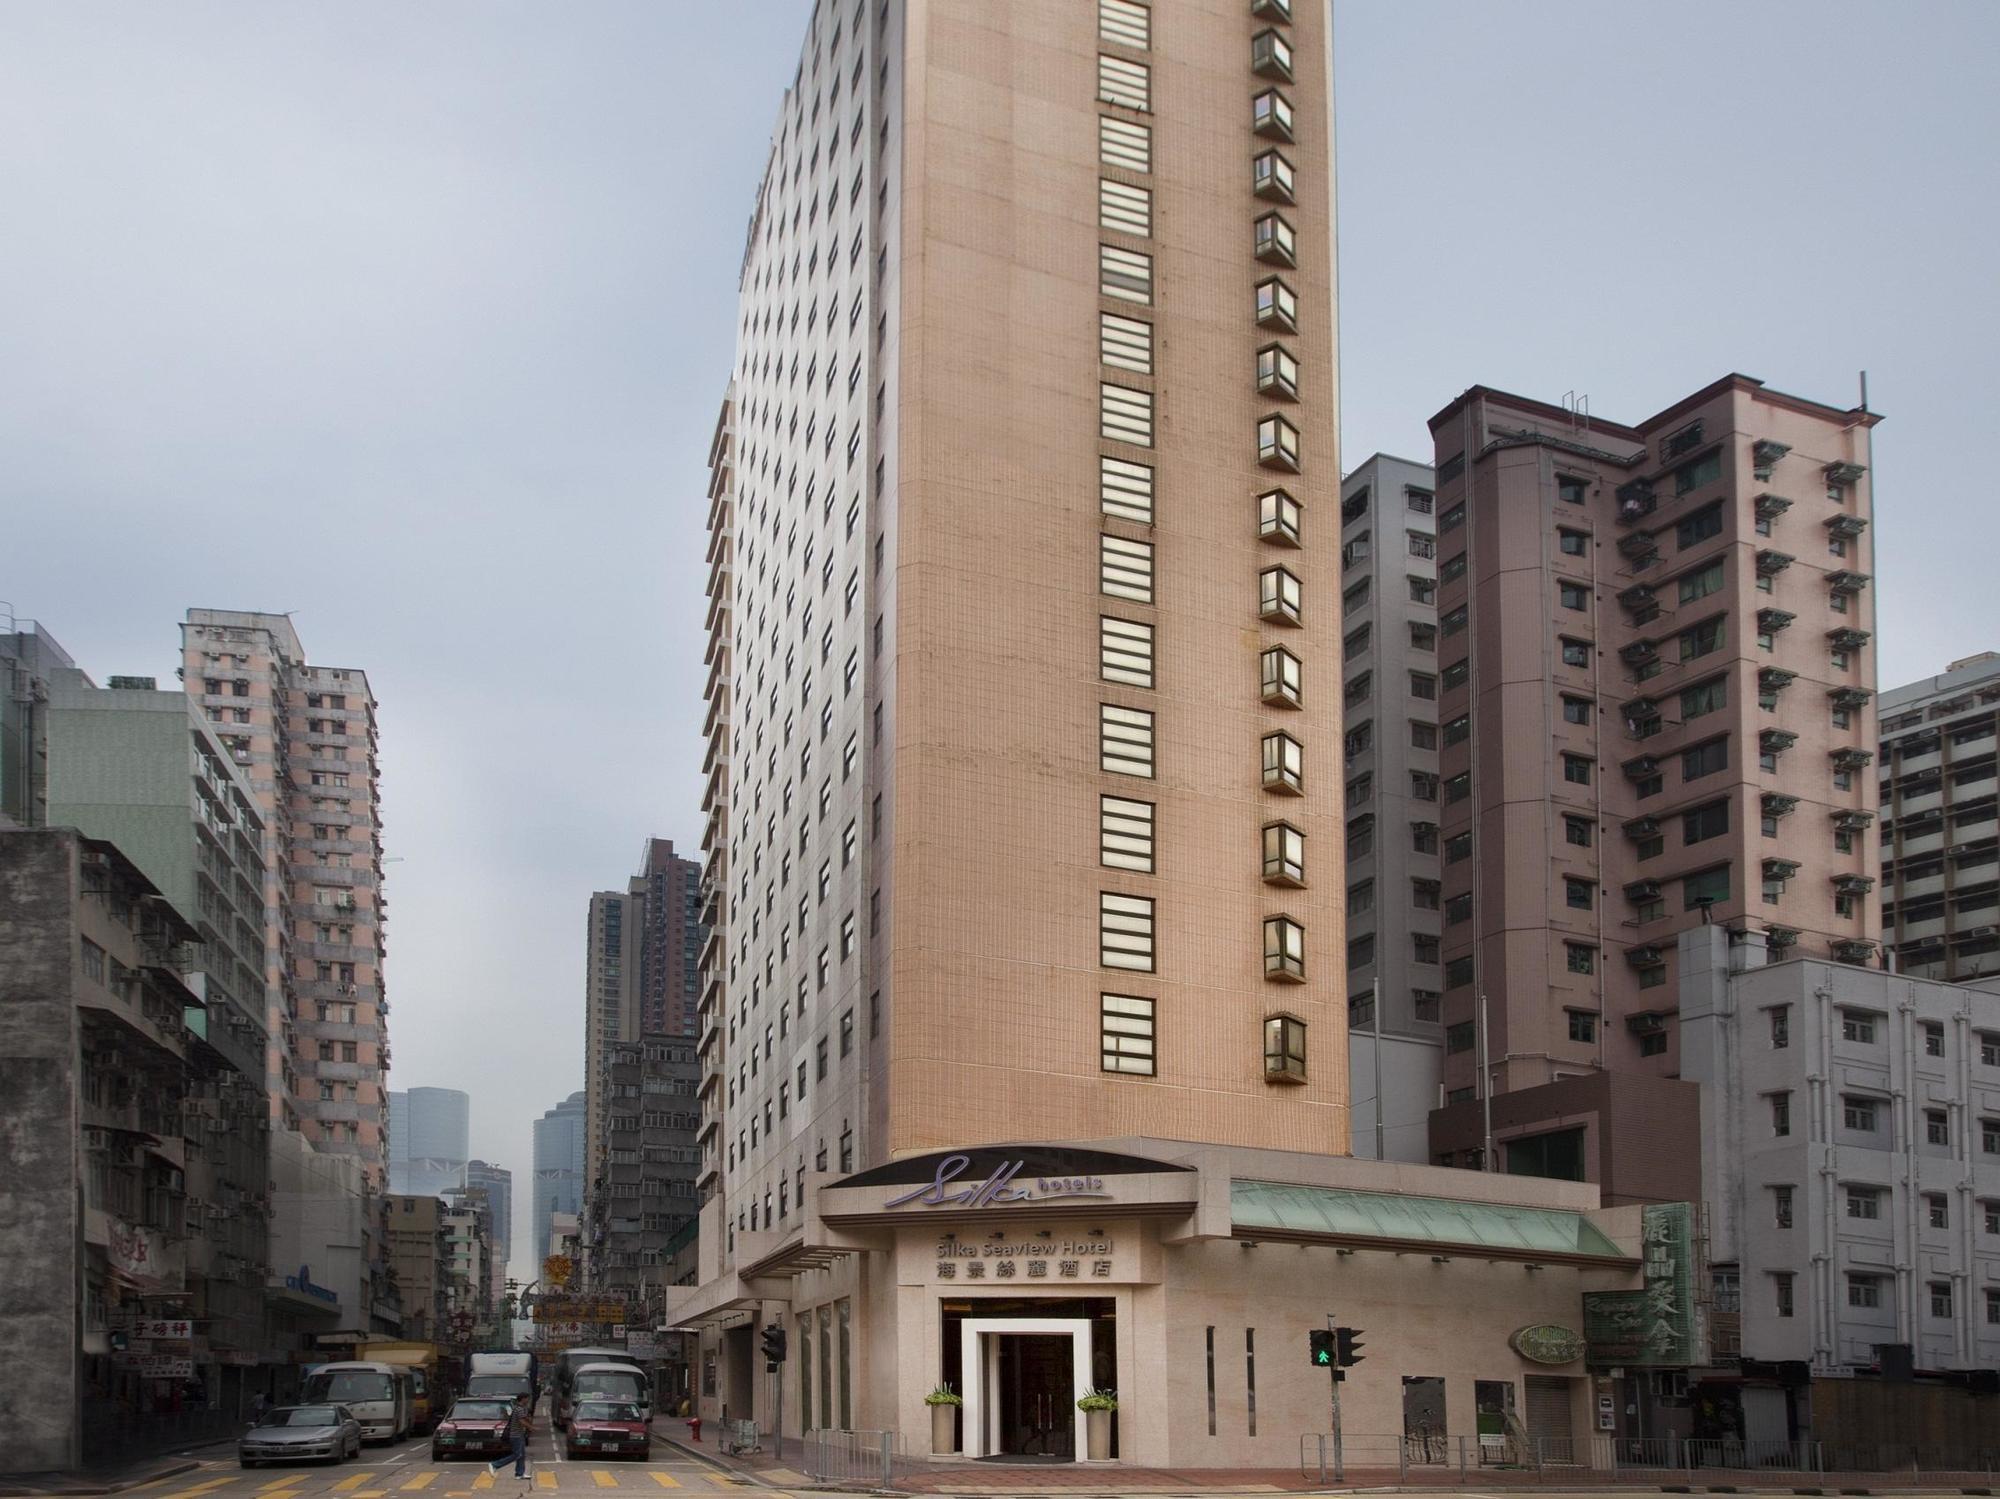 Silka Seaview Hotel Hong Kong Luaran gambar